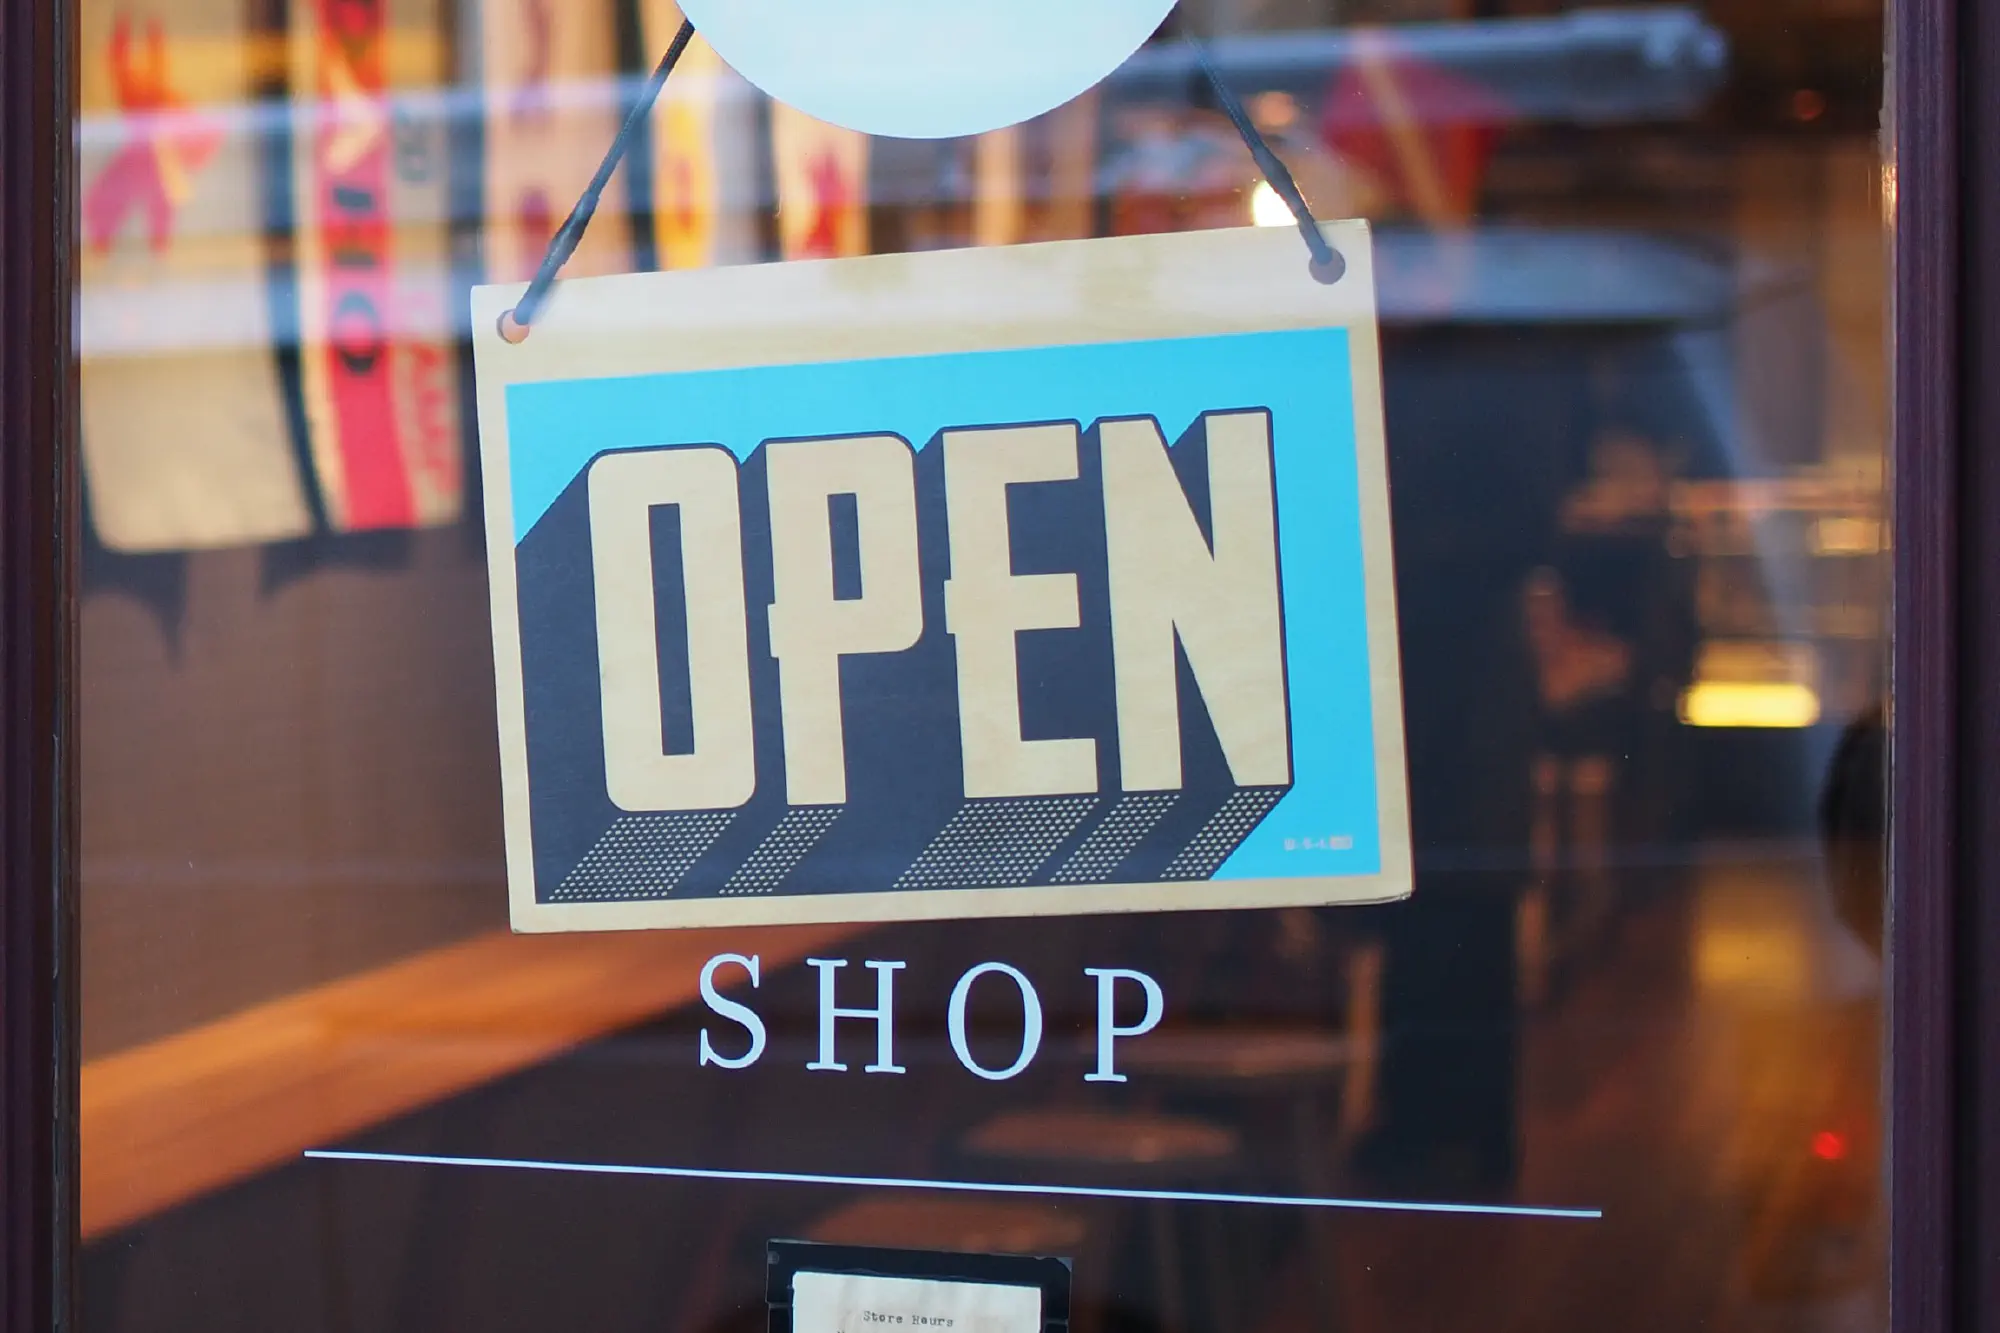 'Open' sign in a shop window